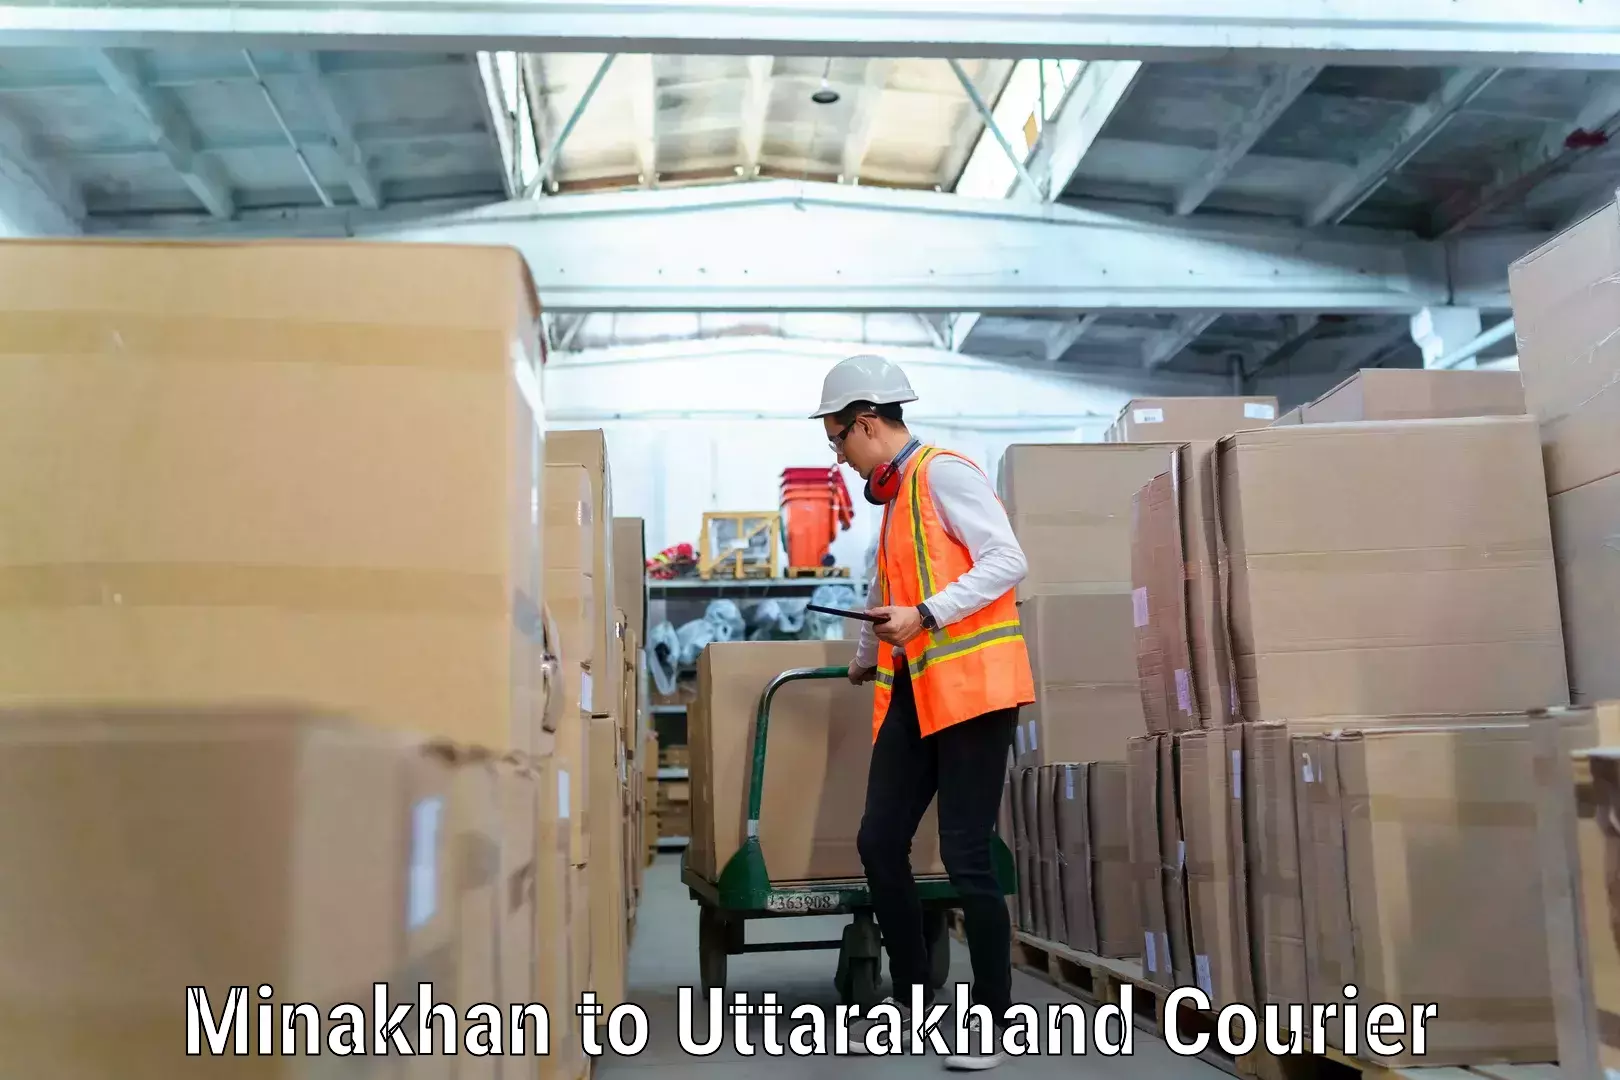 Furniture transport specialists Minakhan to Uttarakhand